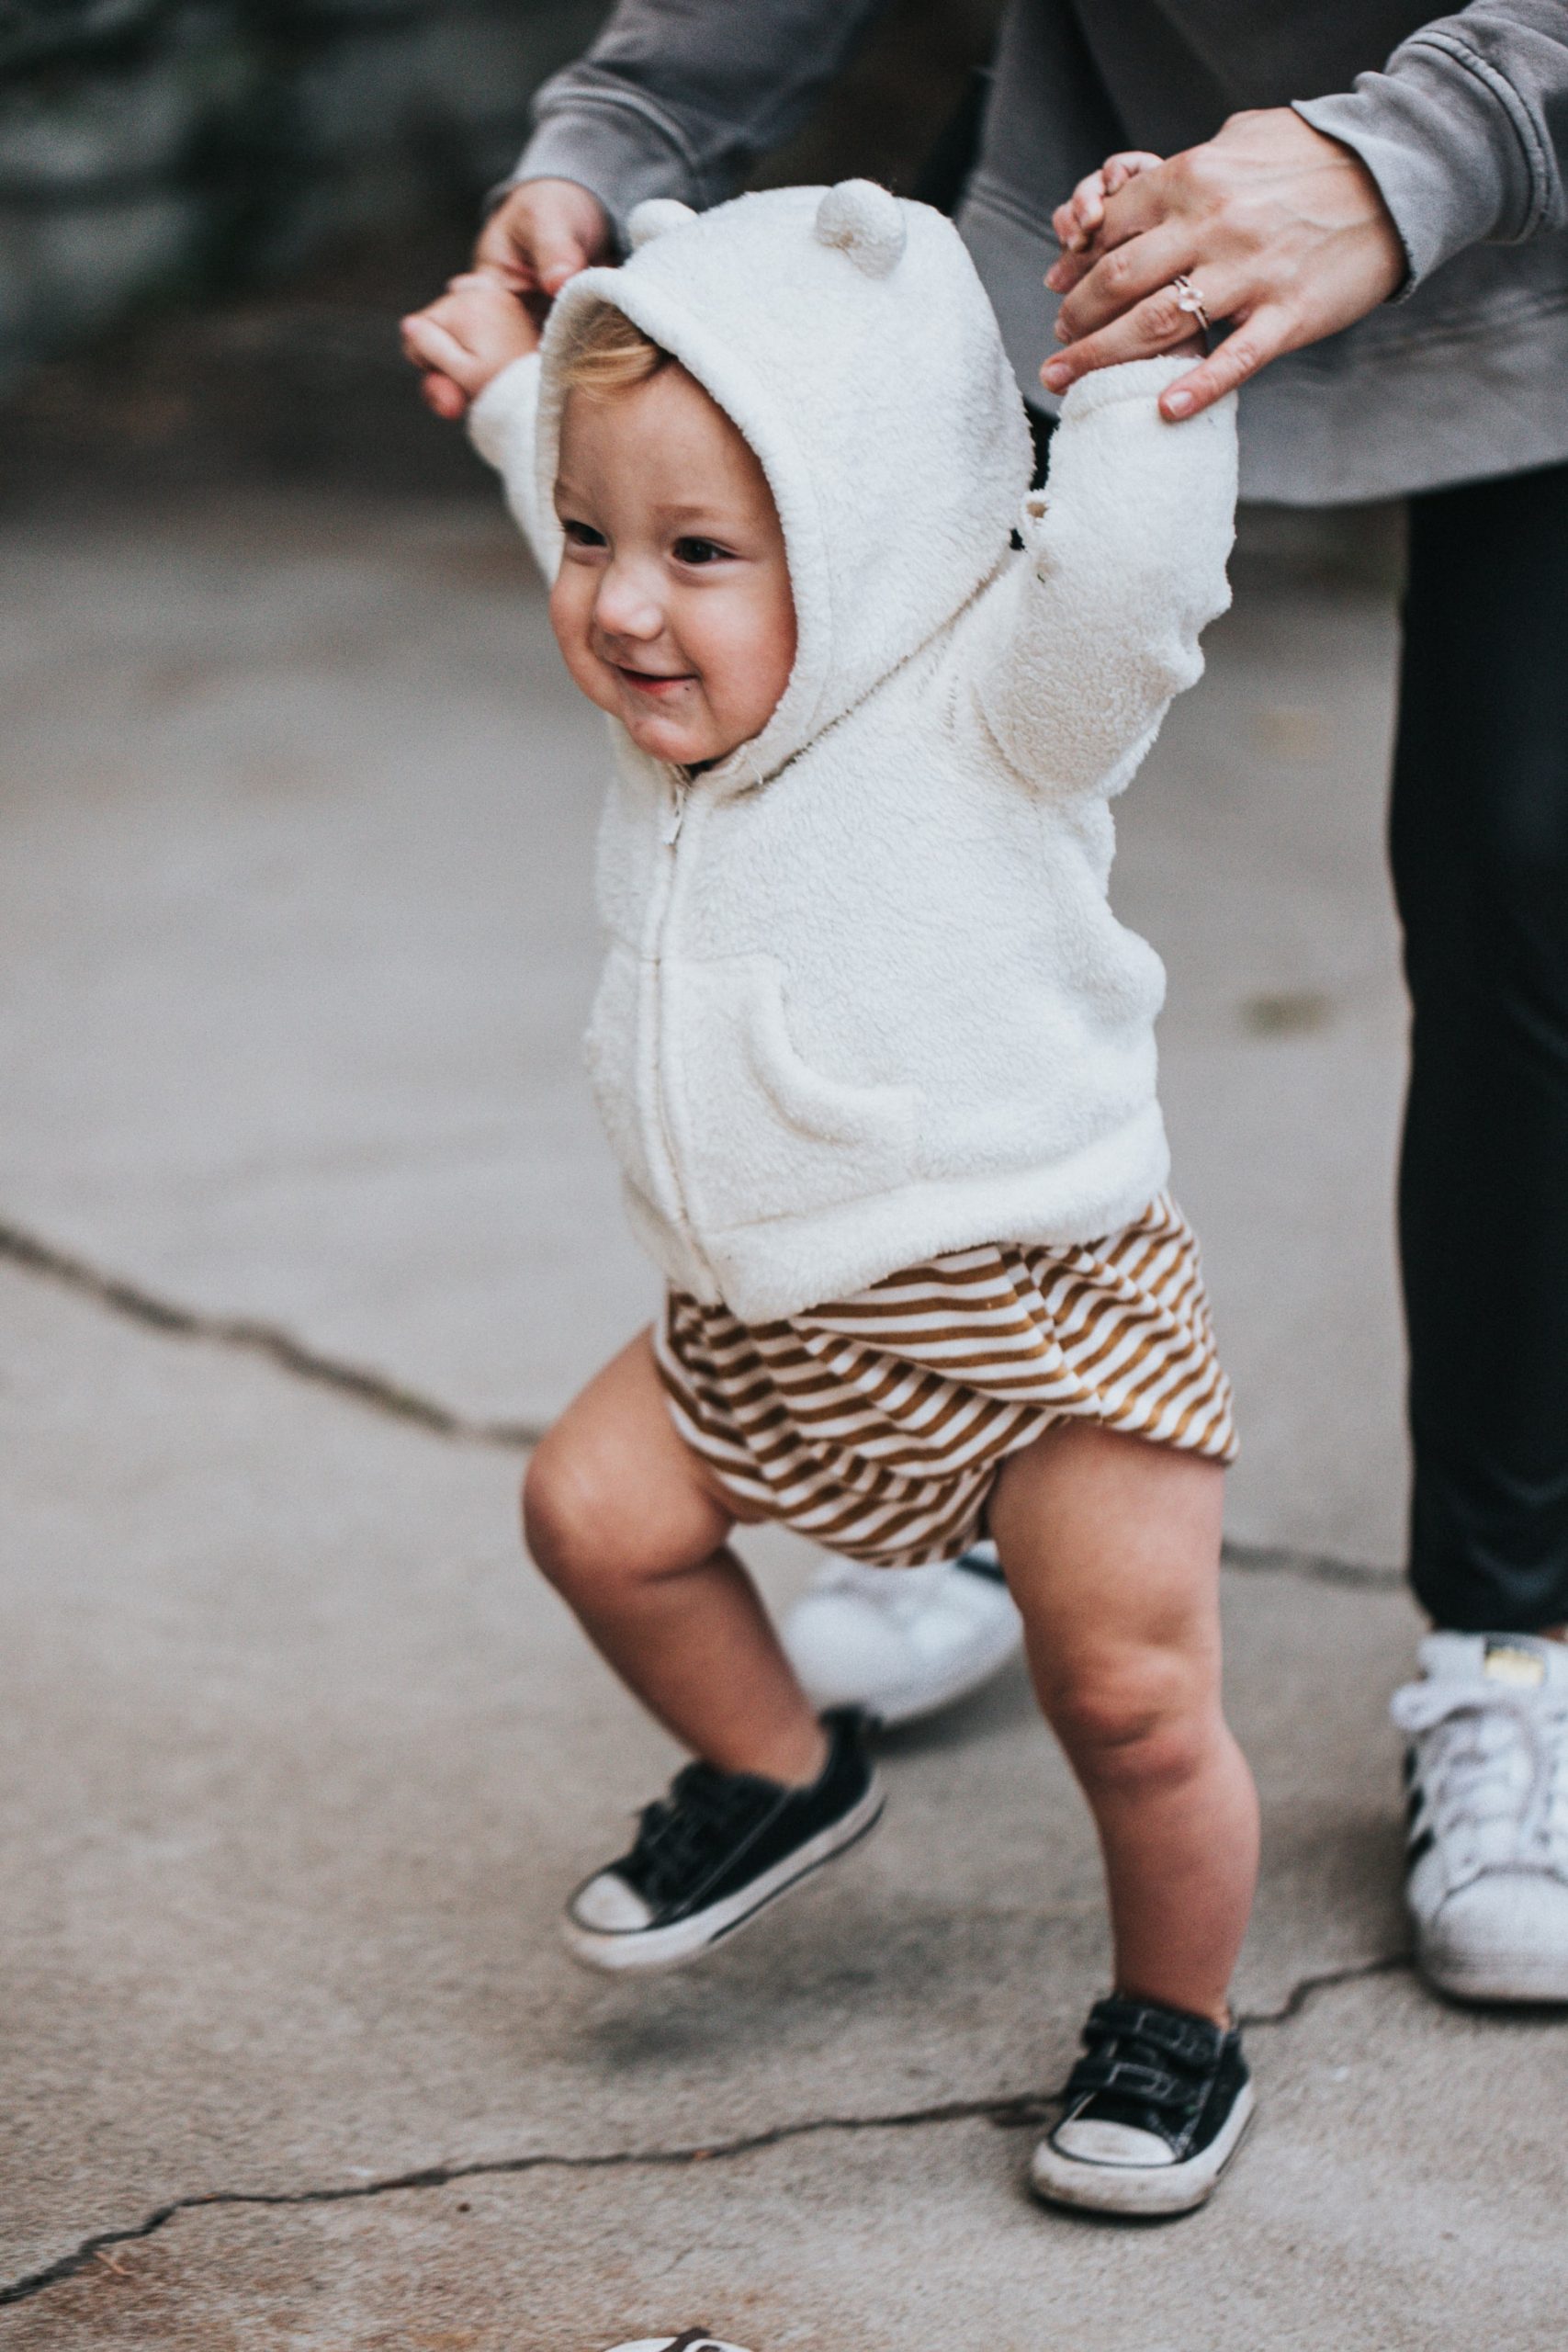 developmental delays, tips to help your baby start walking, baby walking